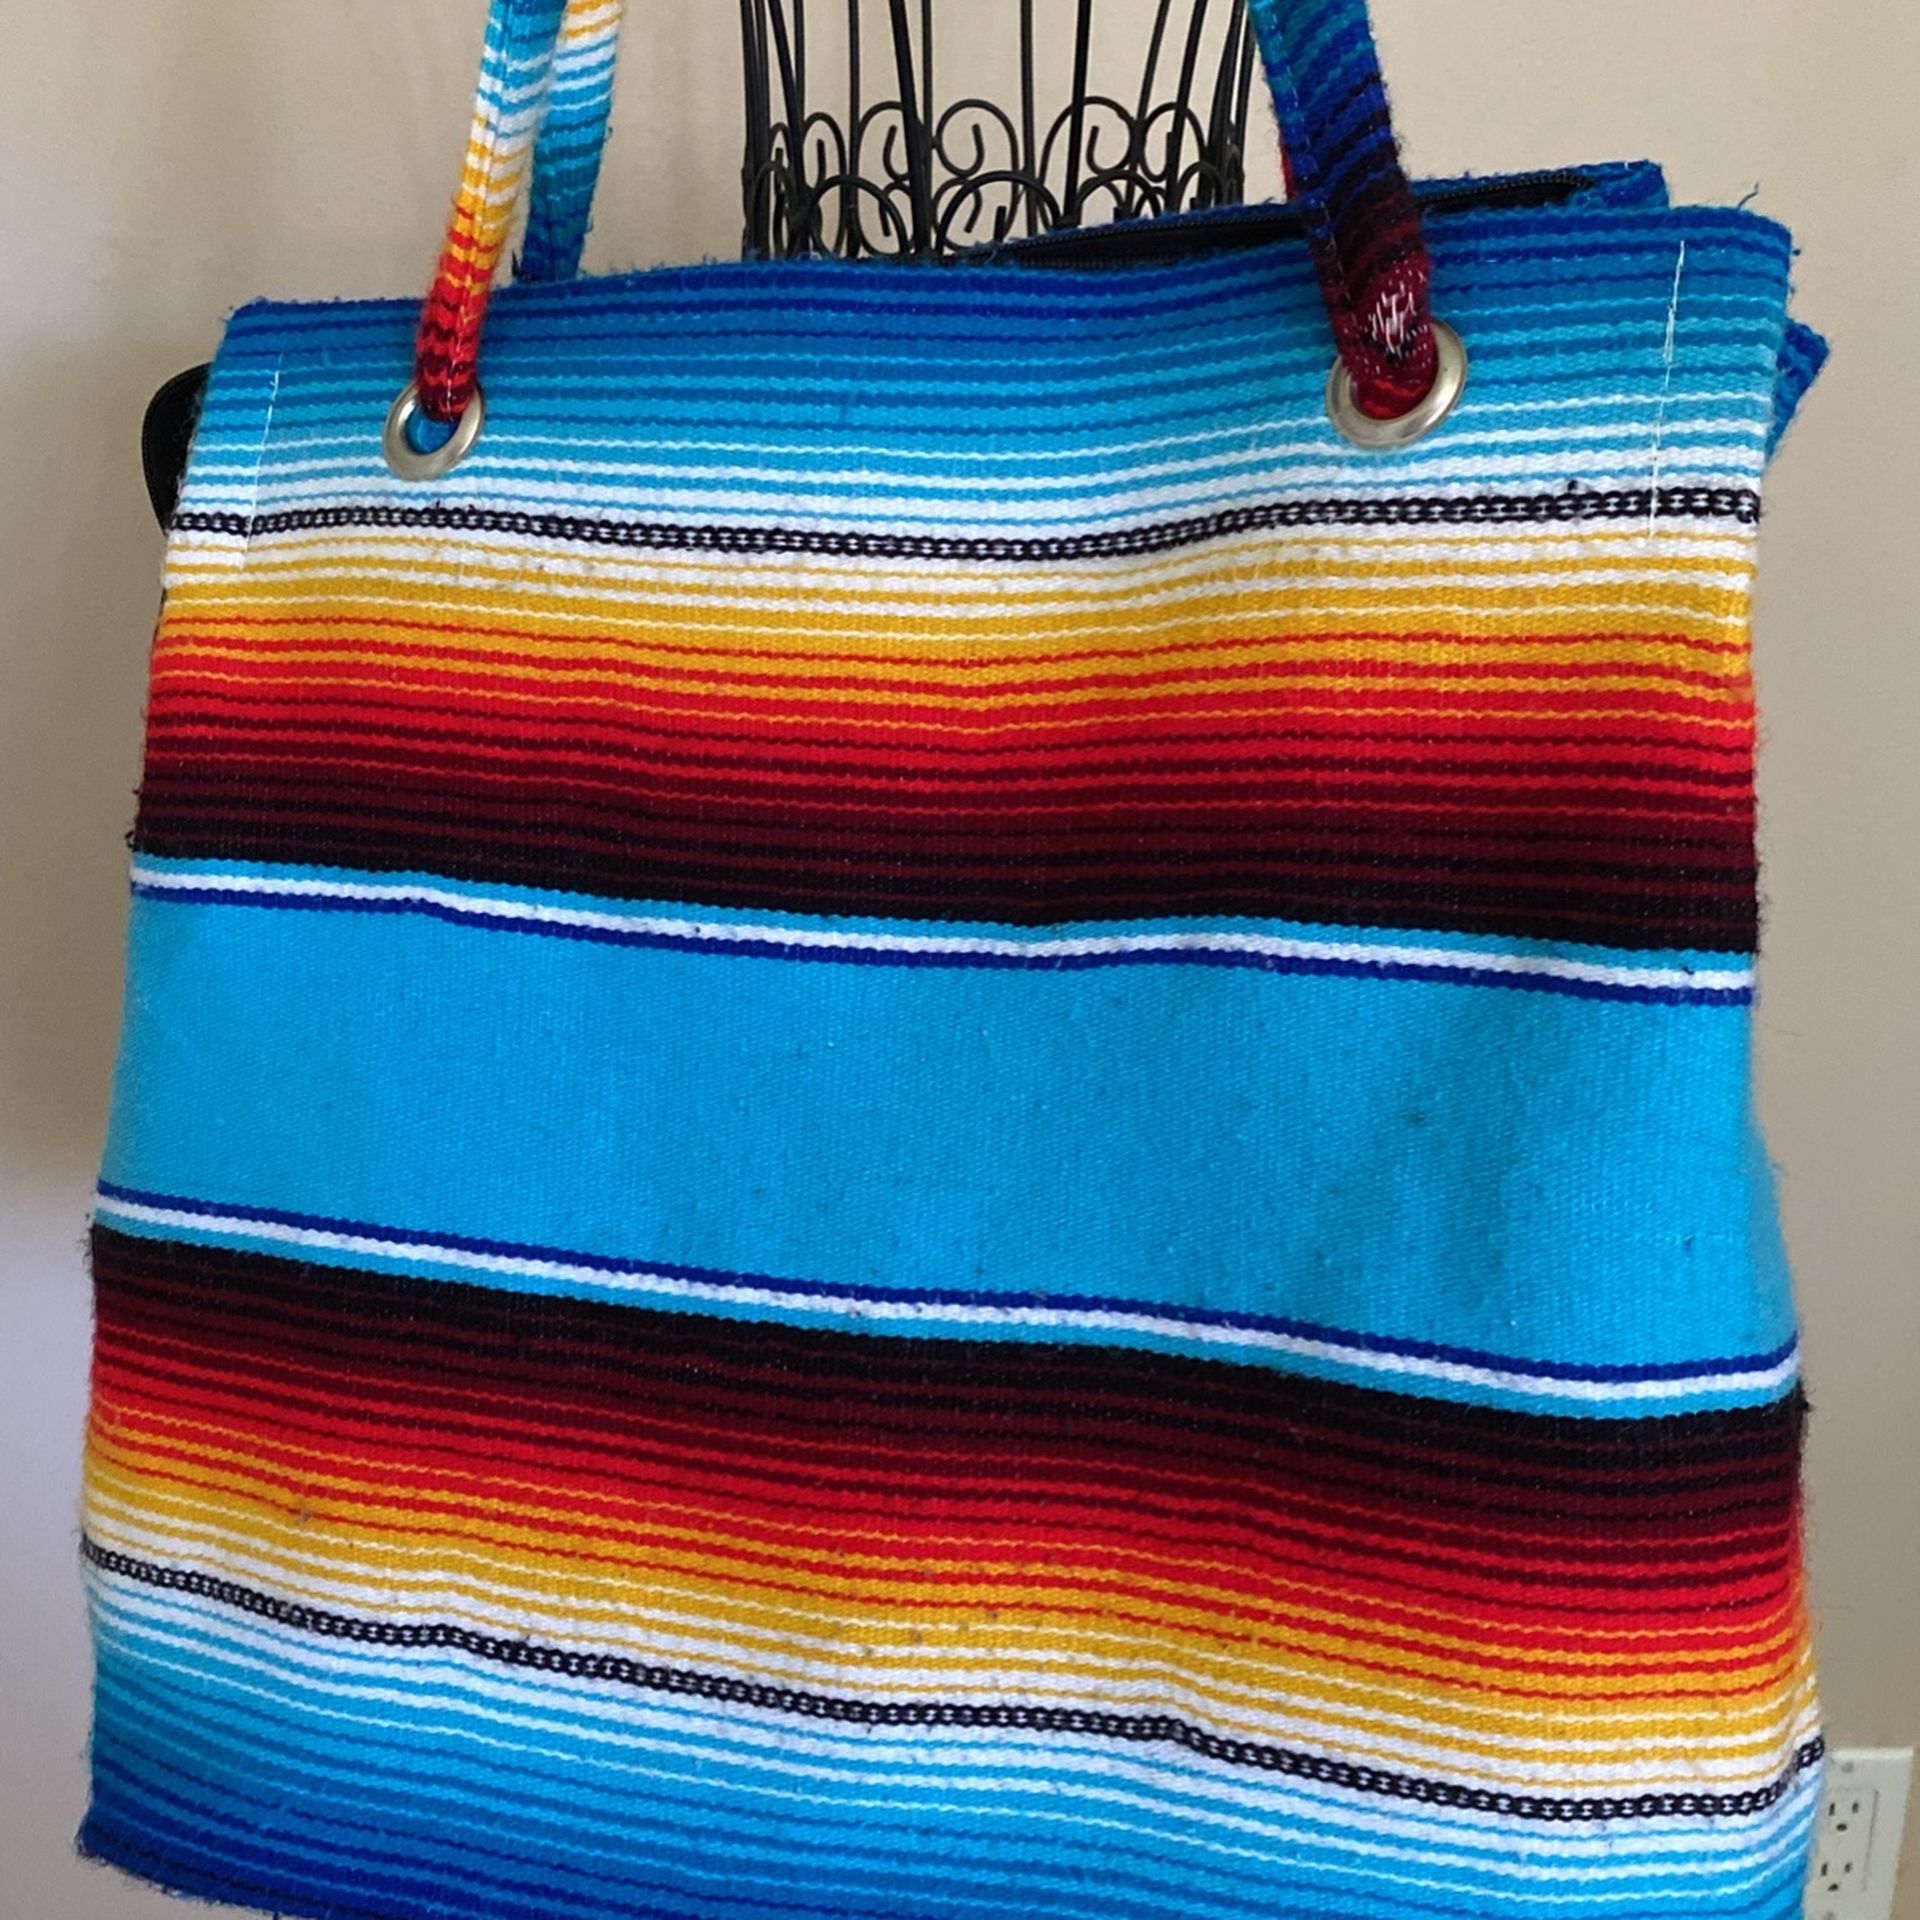 Goyard Anjou Tote Bag for Sale in Santa Clarita, CA - OfferUp